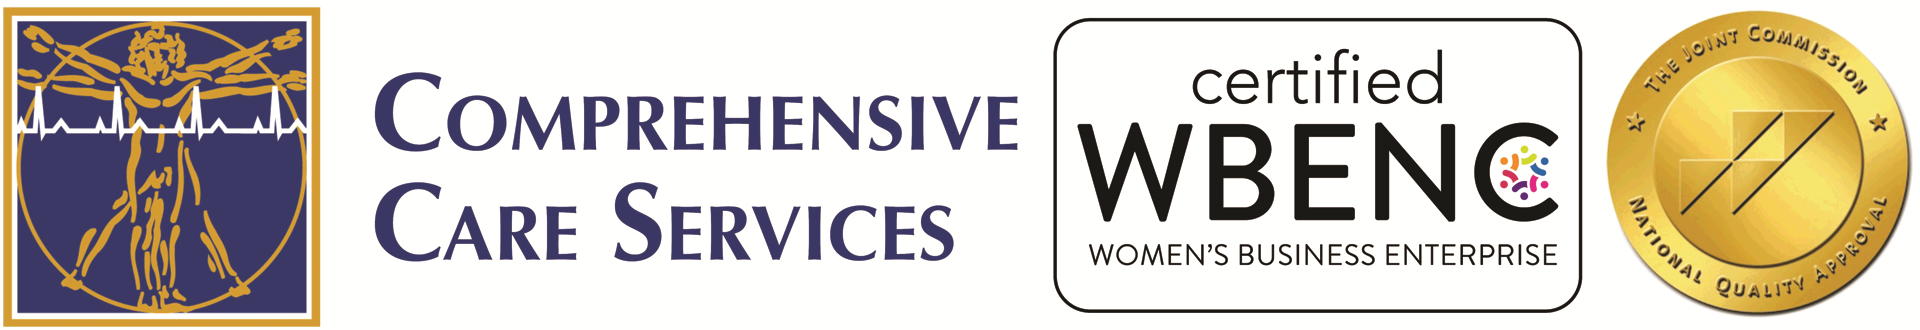 Comprehensive Care Services Company Logo